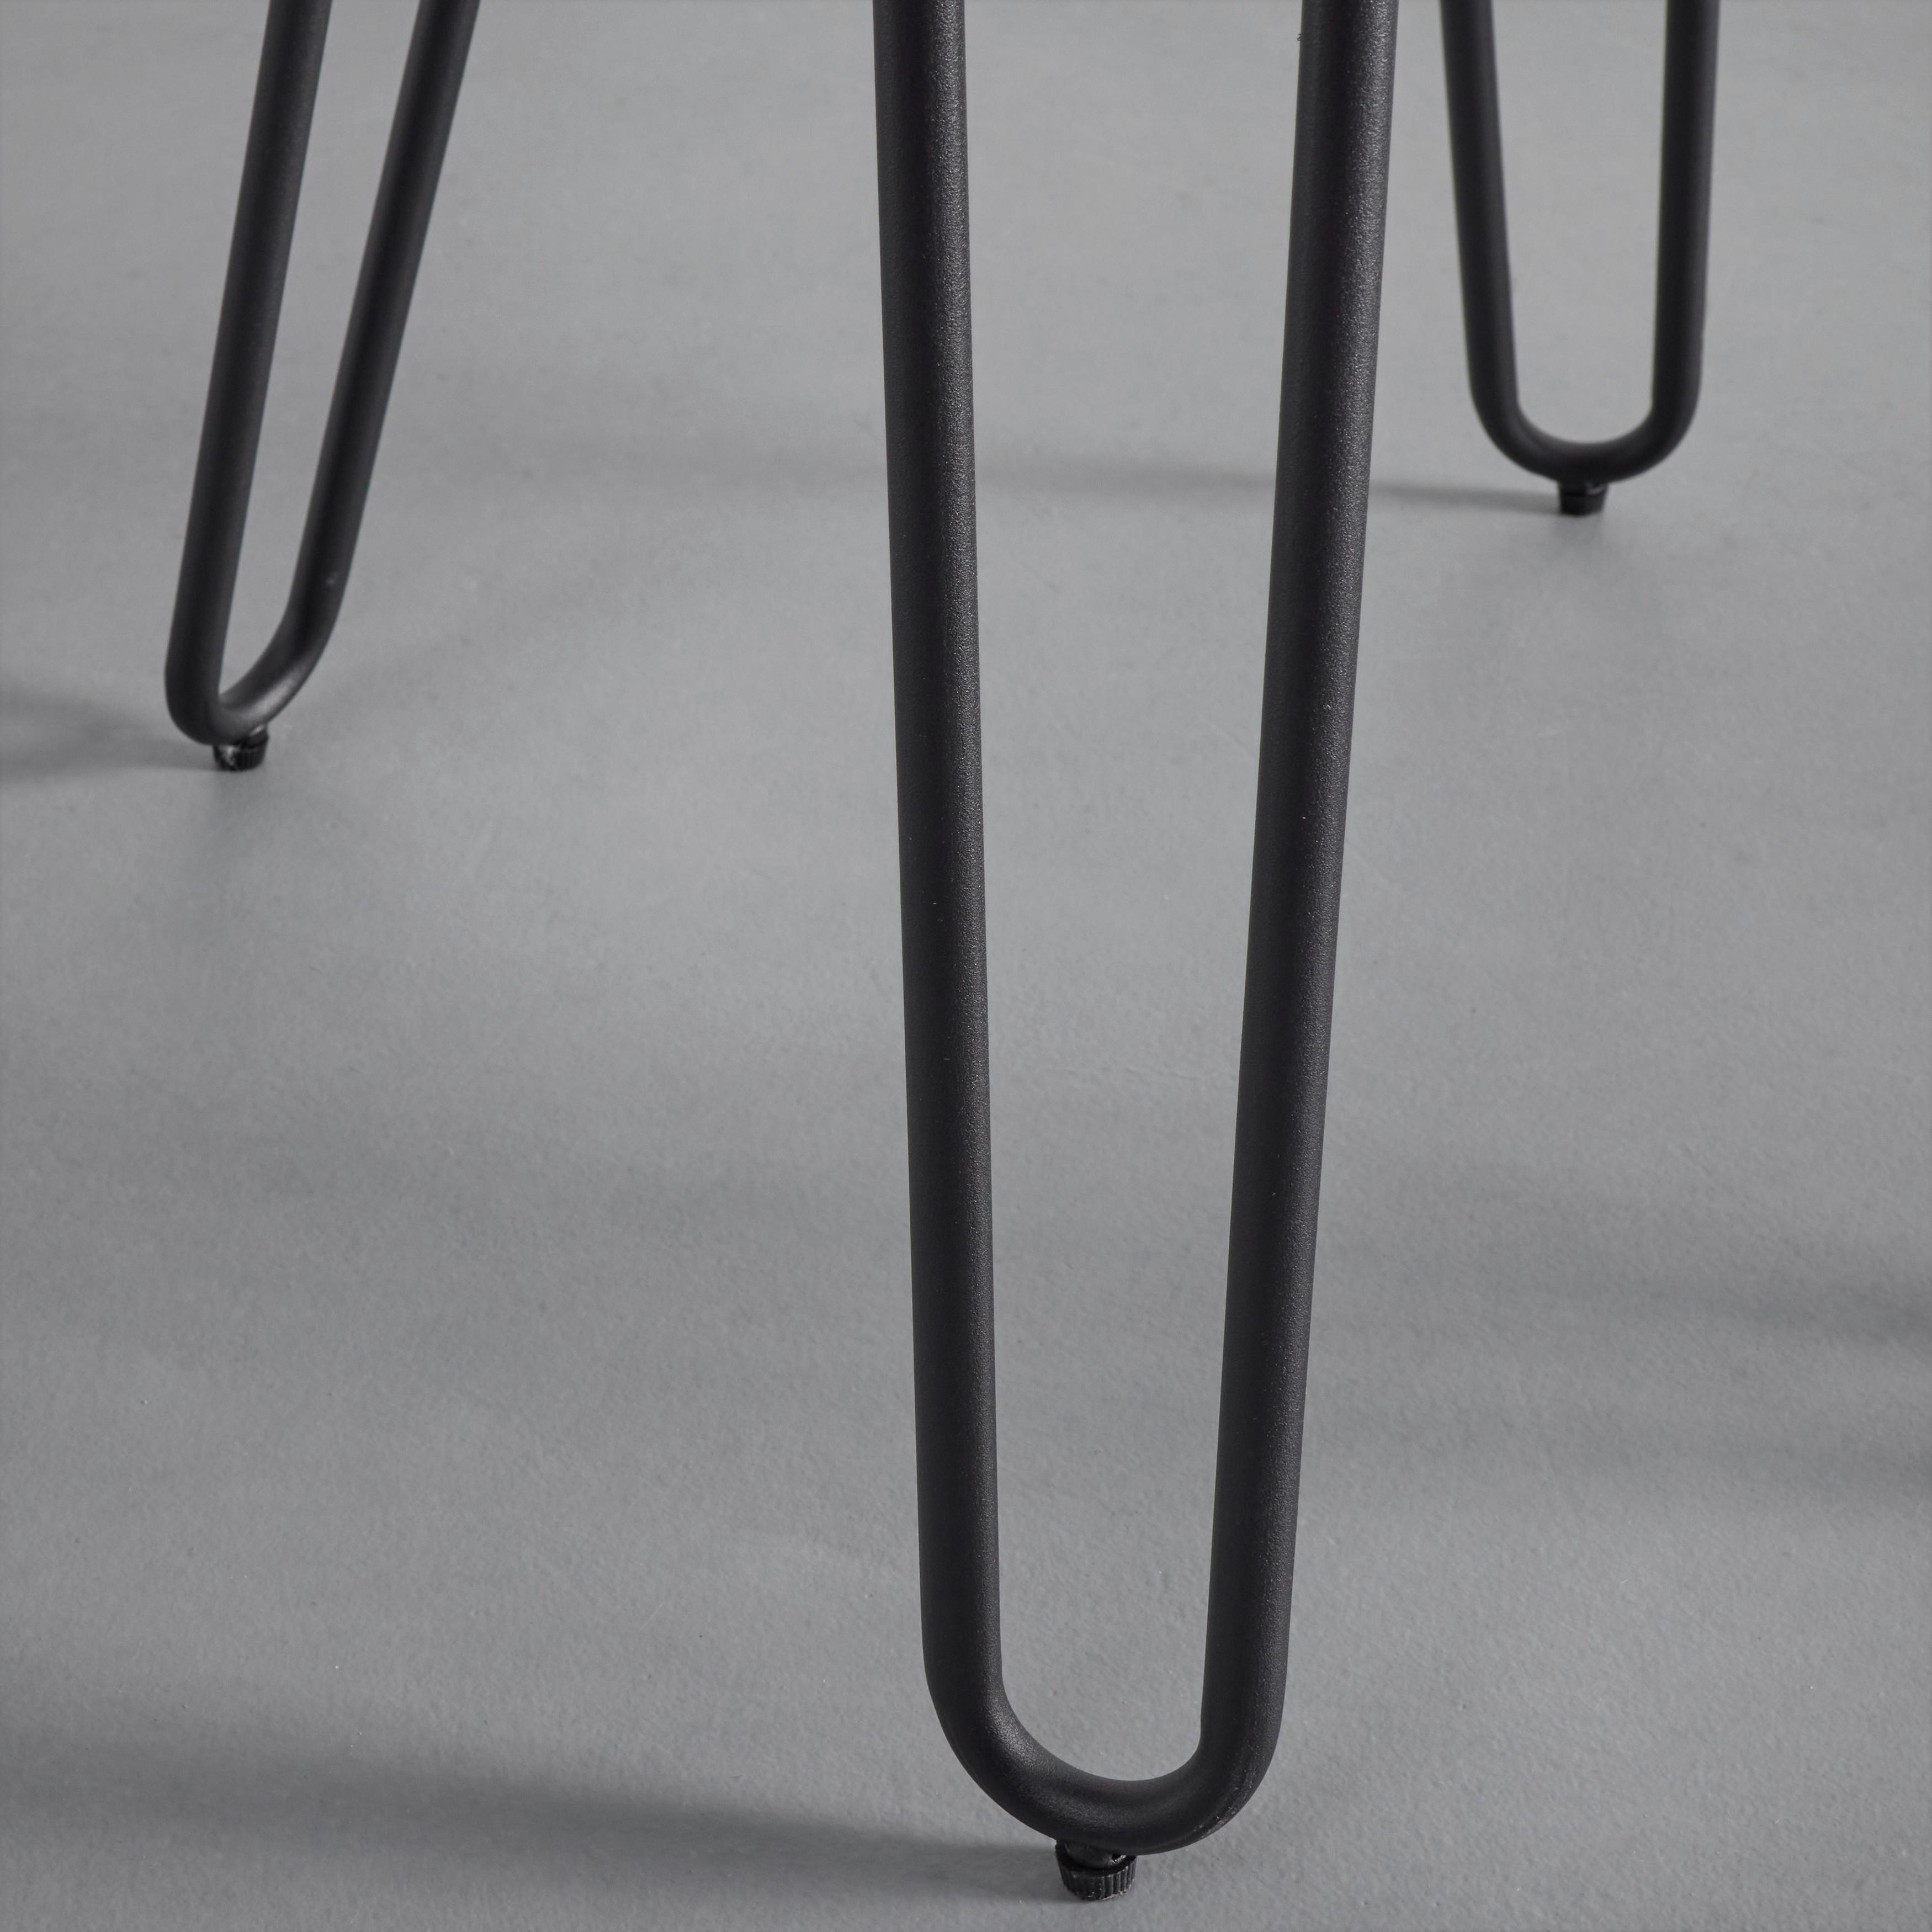 Stuhl "Ivie", Lederlook, grau, Gepolstert - Schwarz/Grau, MODERN, Holz/Textil (43/86/62cm) - Bessagi Home